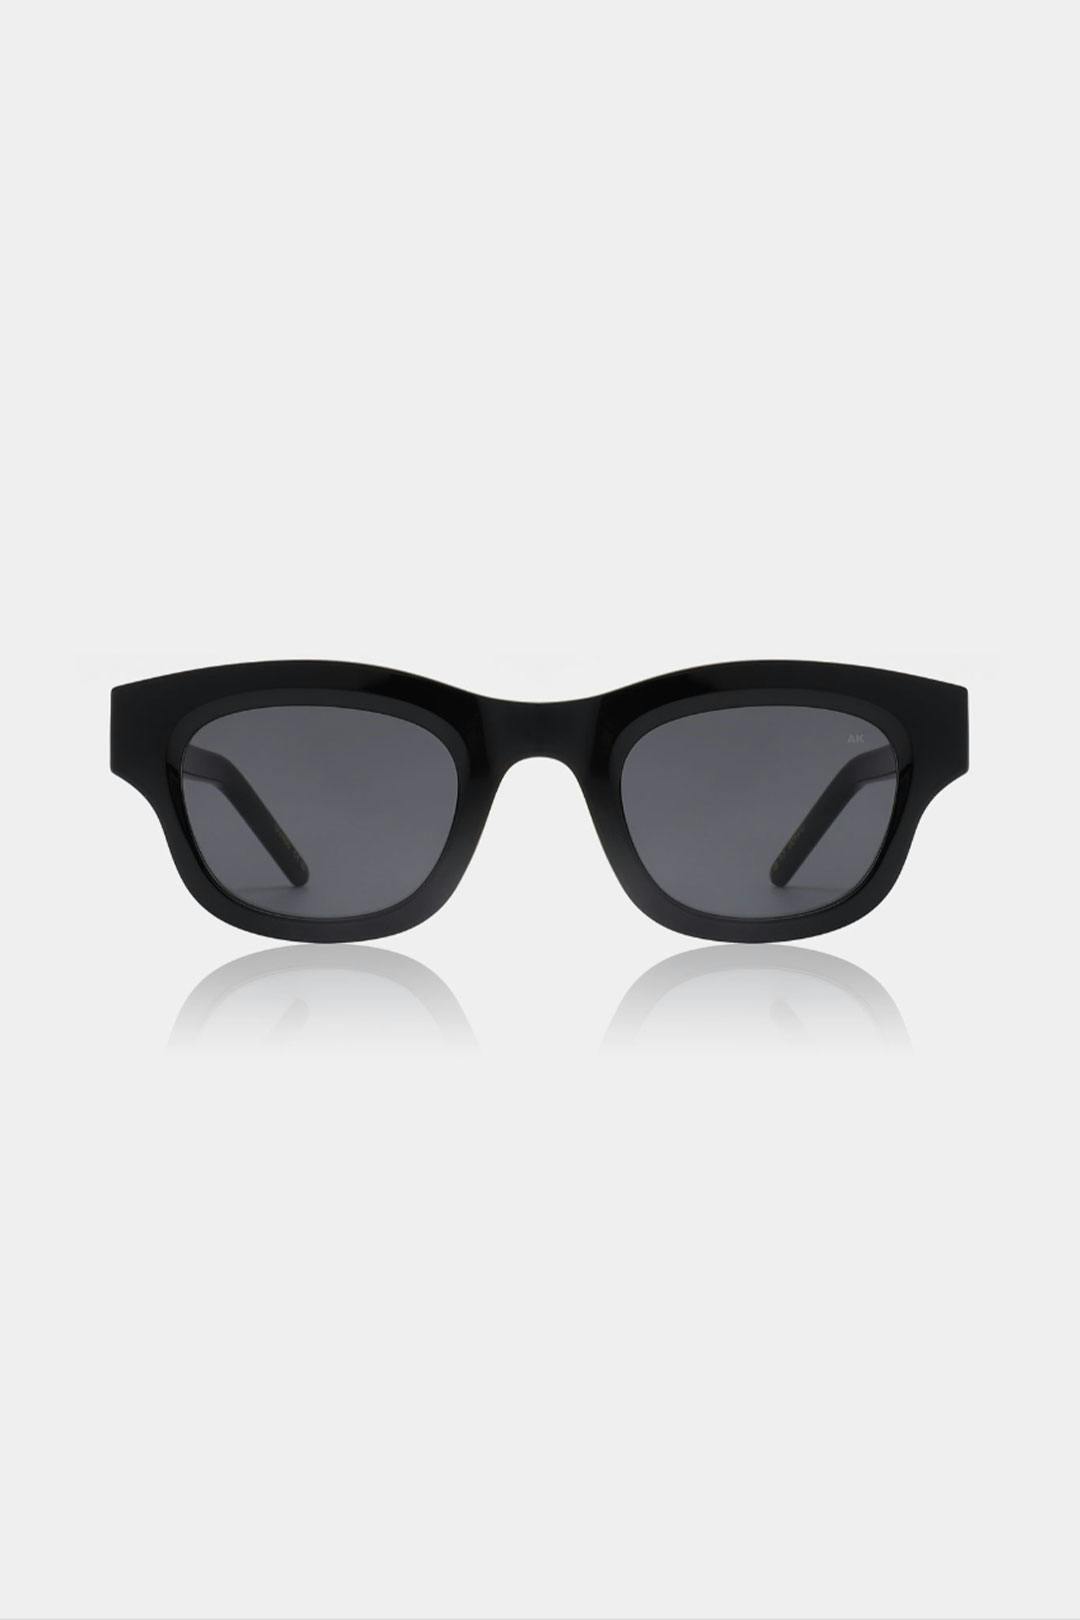 Lane sunglasses